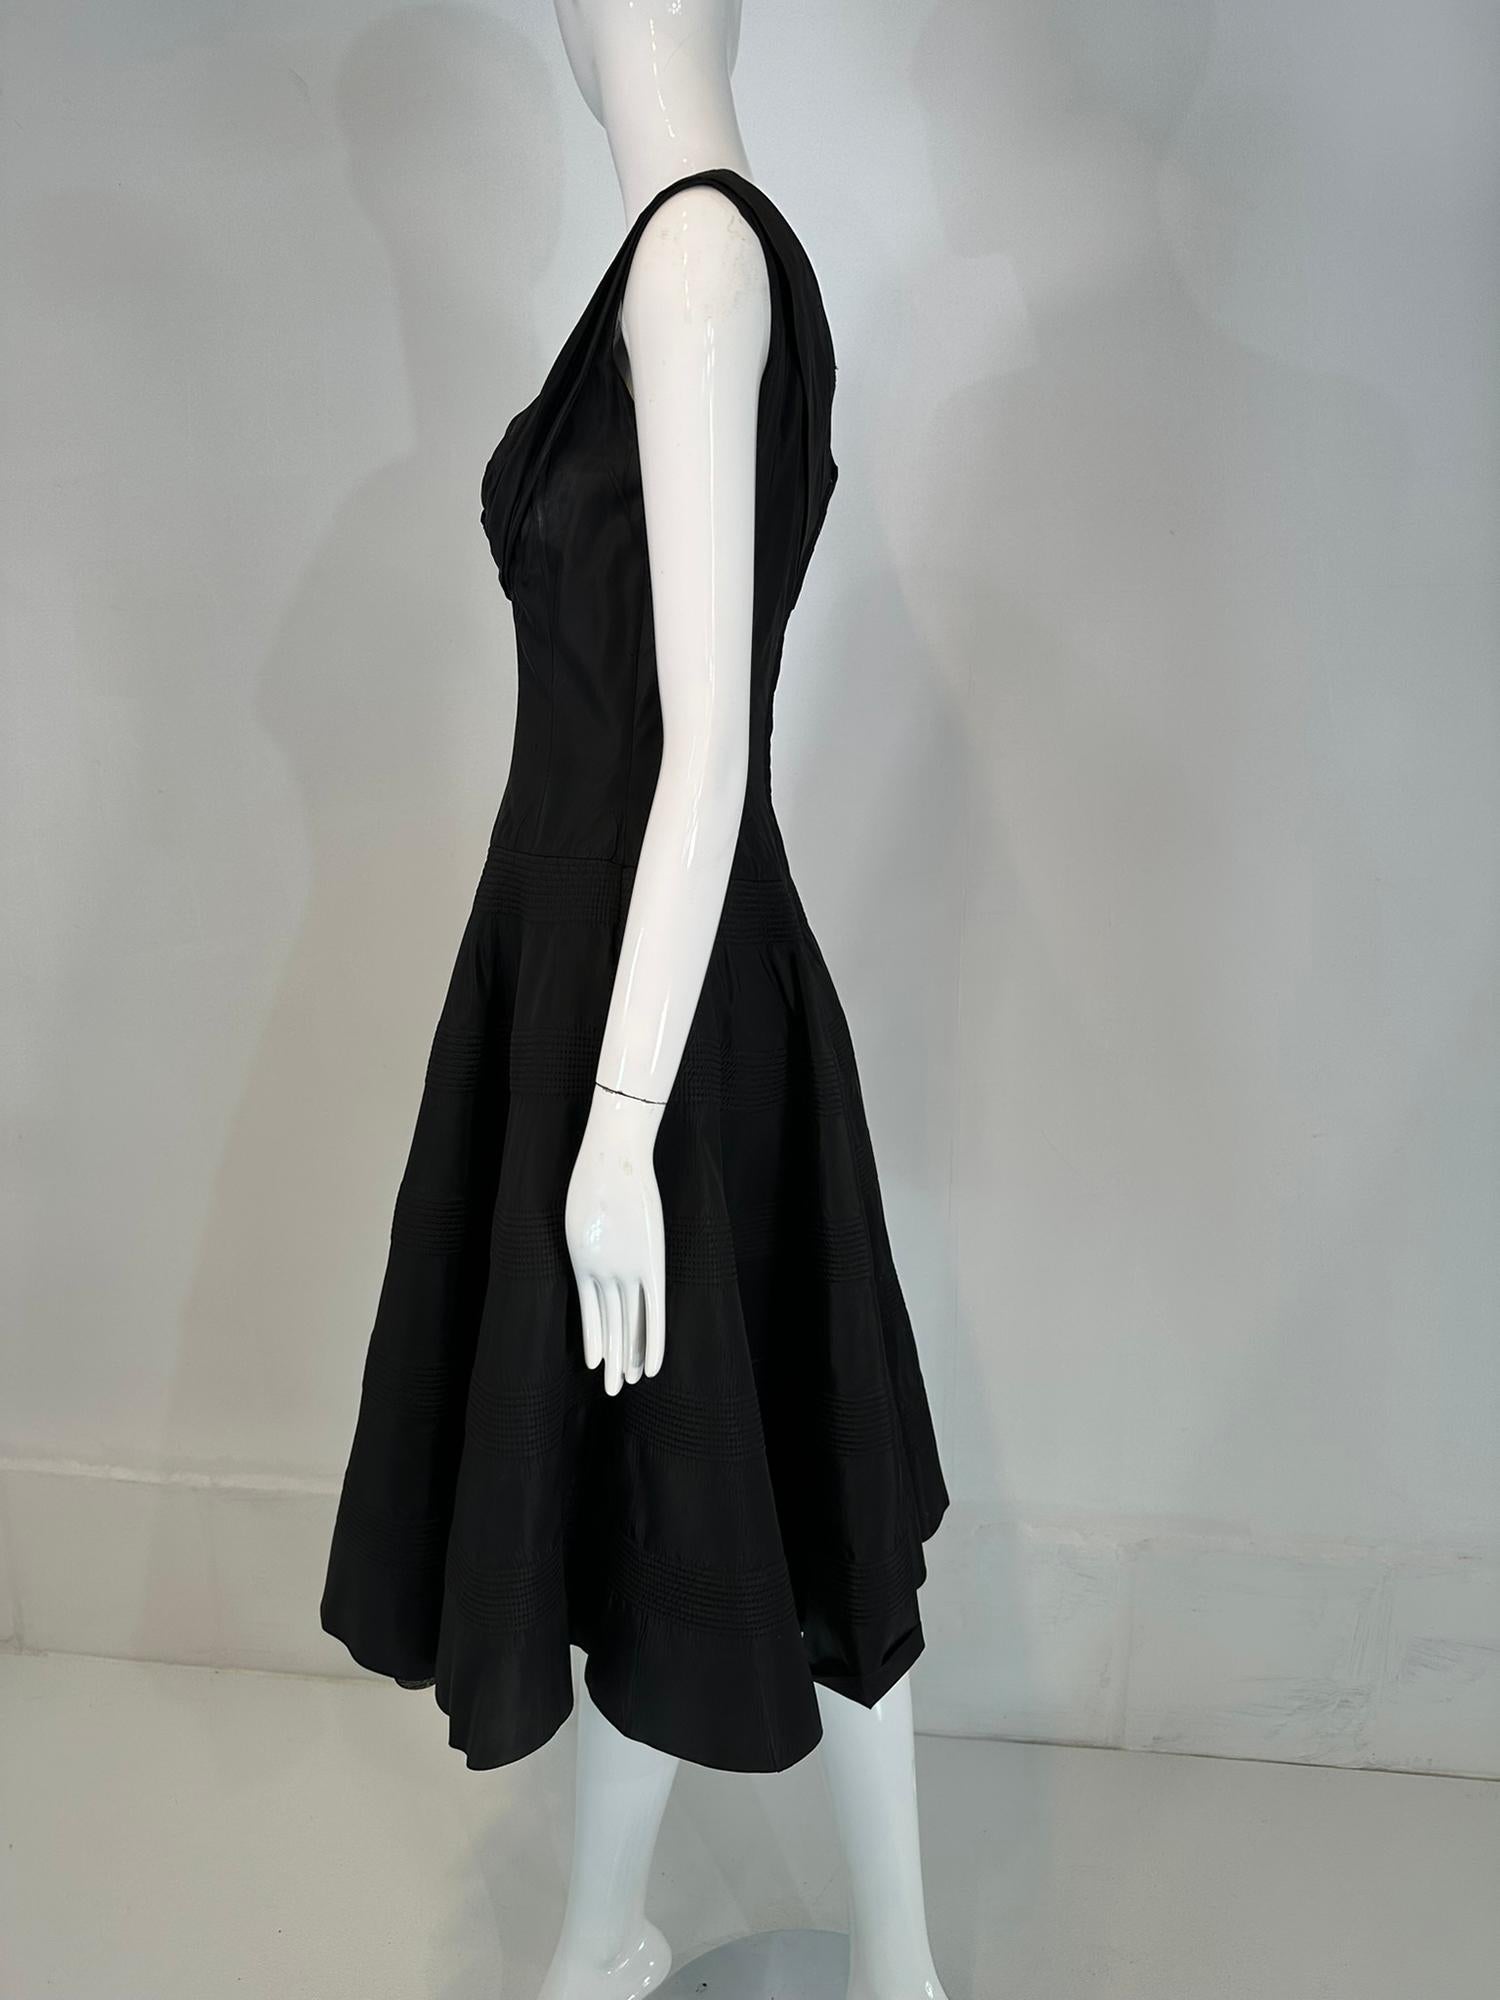 Fred Perlberg 1950s Black Taffeta Scoop Bodice Quilted Full Skirt Evening Dress For Sale 7